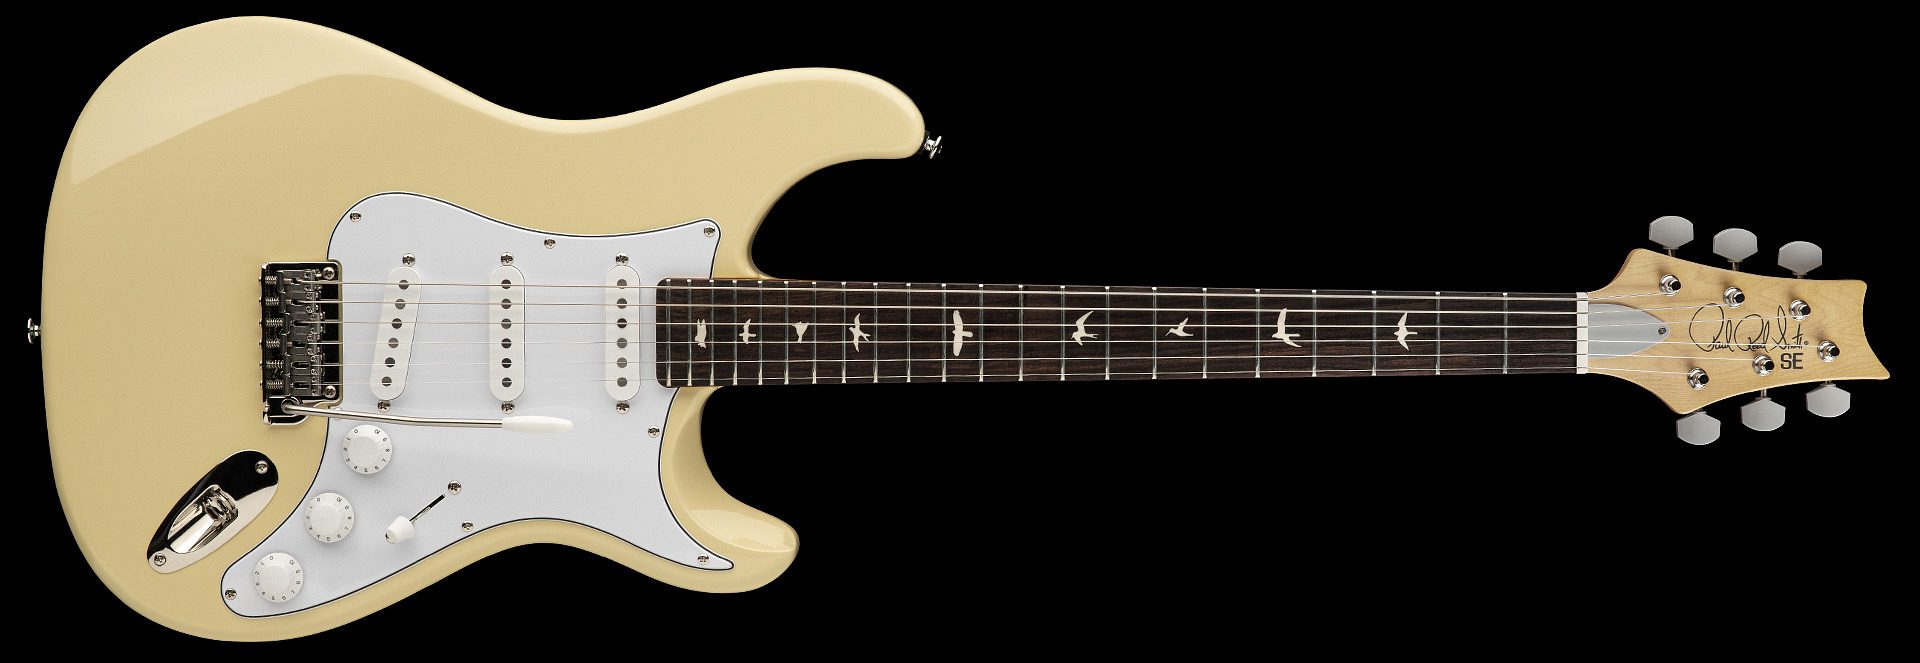 PRS Guitars John Mayer Silver Sky SE Electric Guitar with Gigbag - Moon White 109639::3J: